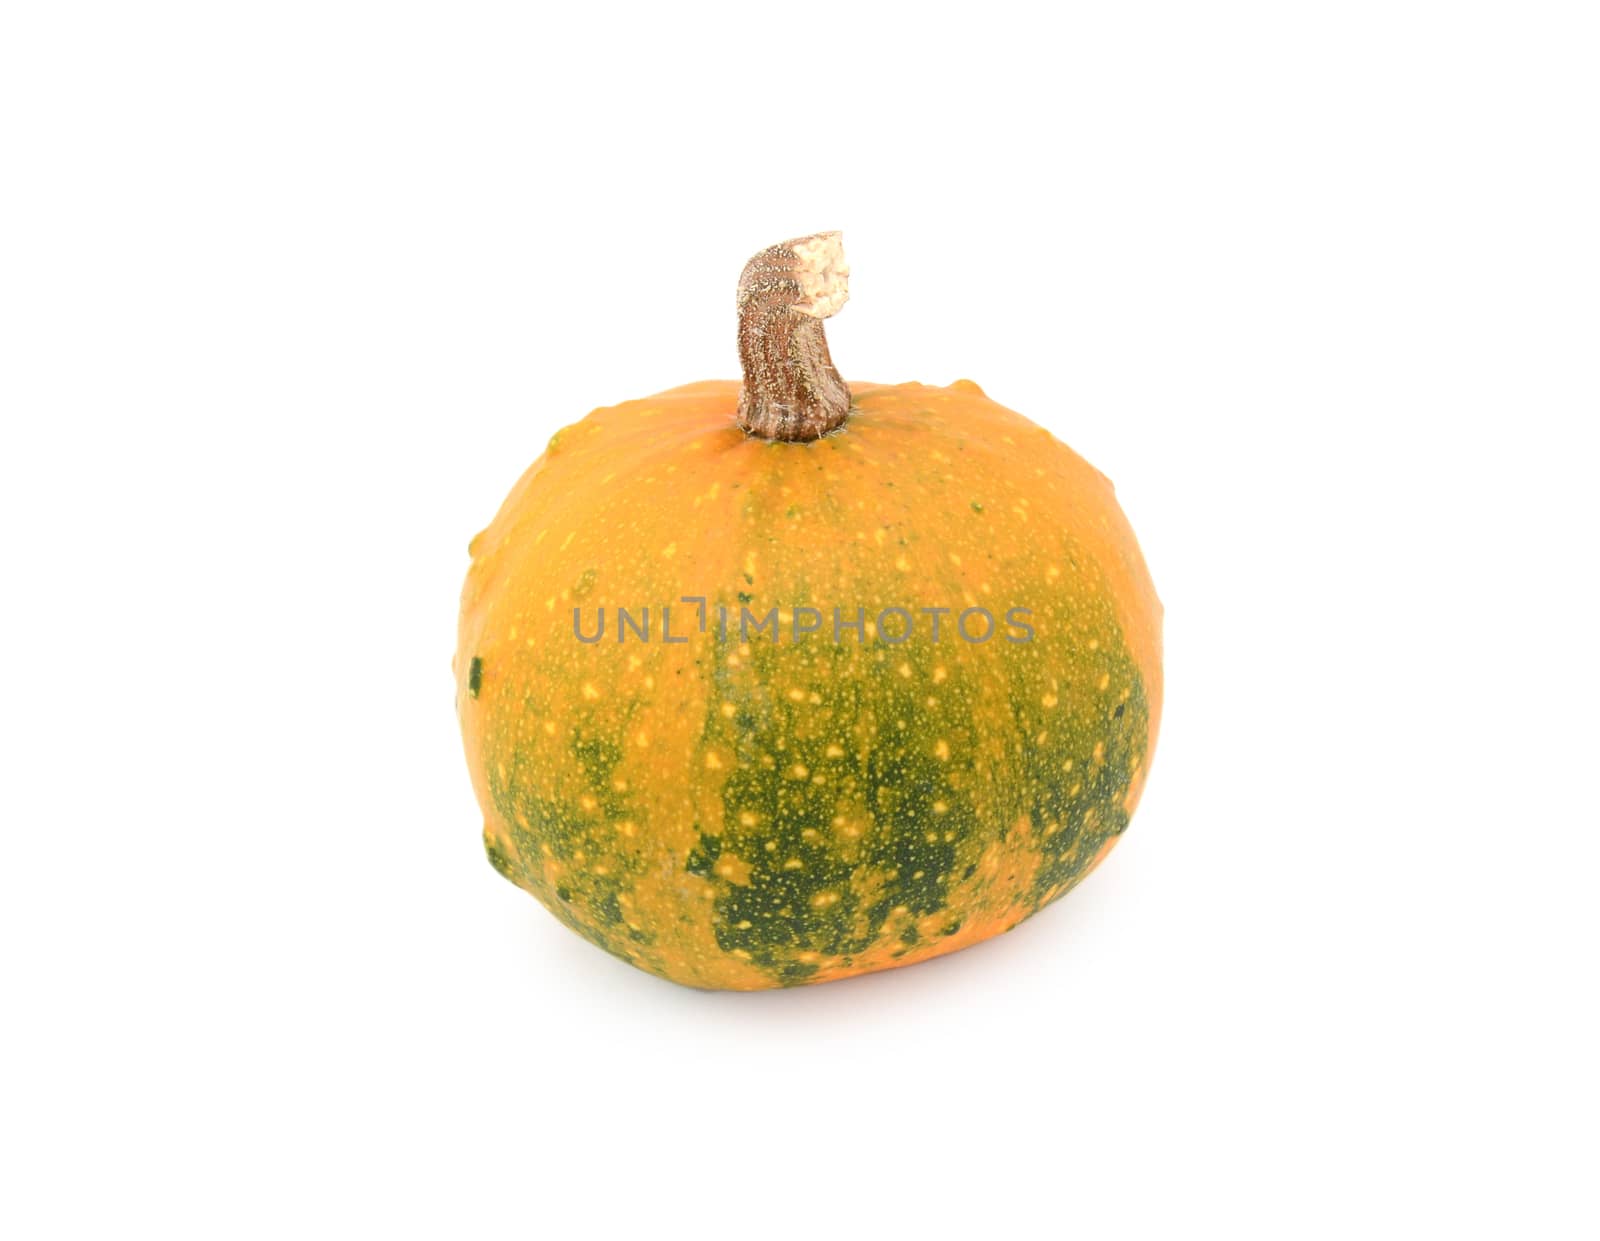 Ornamental gourd ripening from dark green to orange by sarahdoow